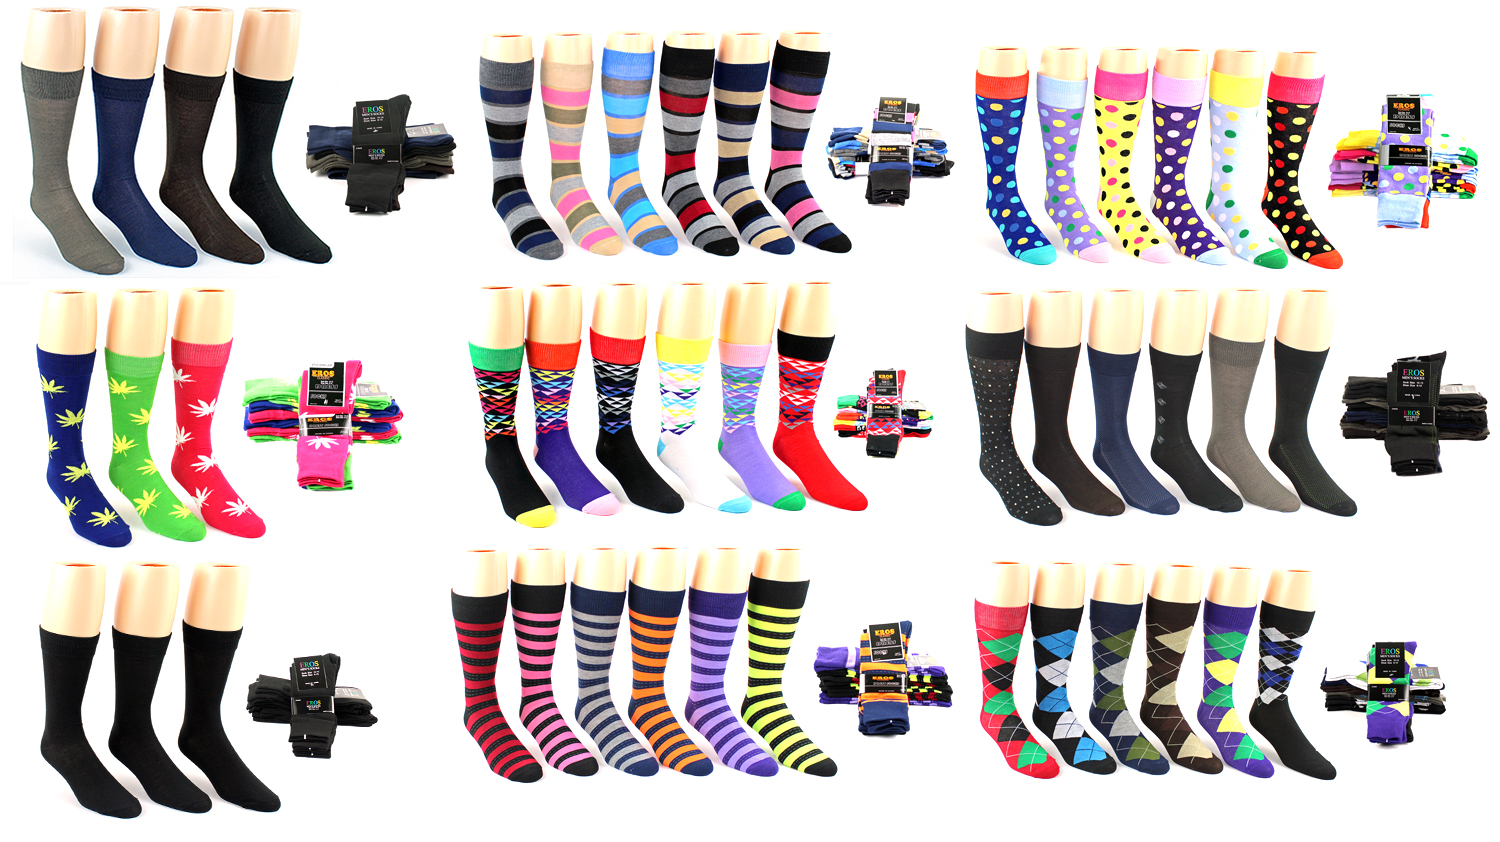 Men's Casual Crew DRESS Socks - Assorted Styles - Size 10-13